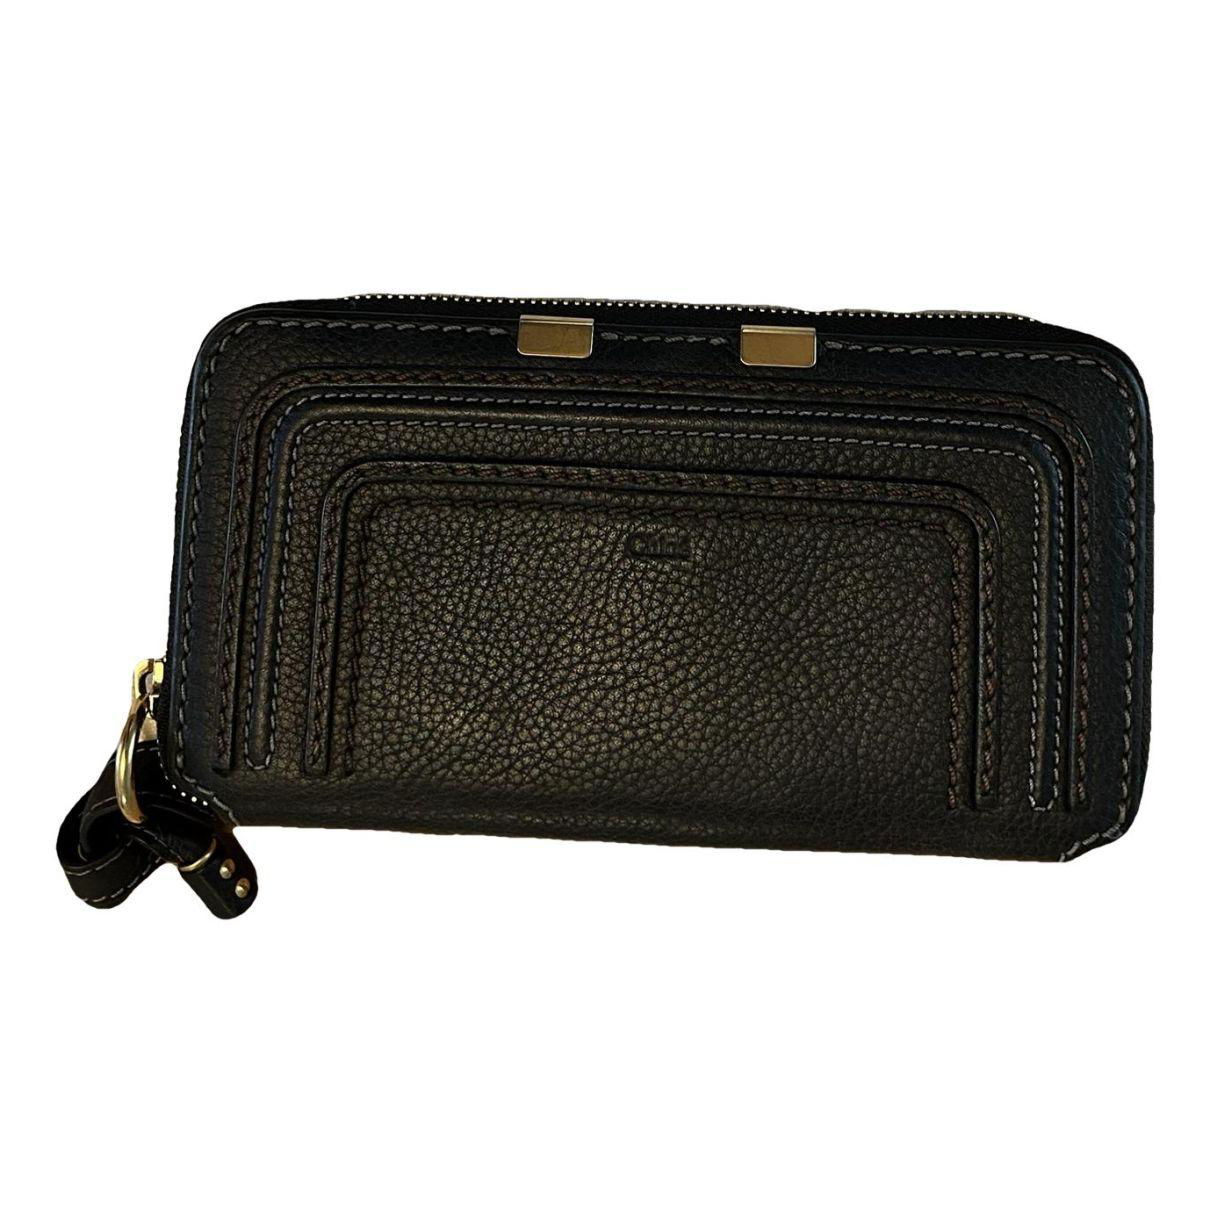 Marcie leather purse by CHLOE